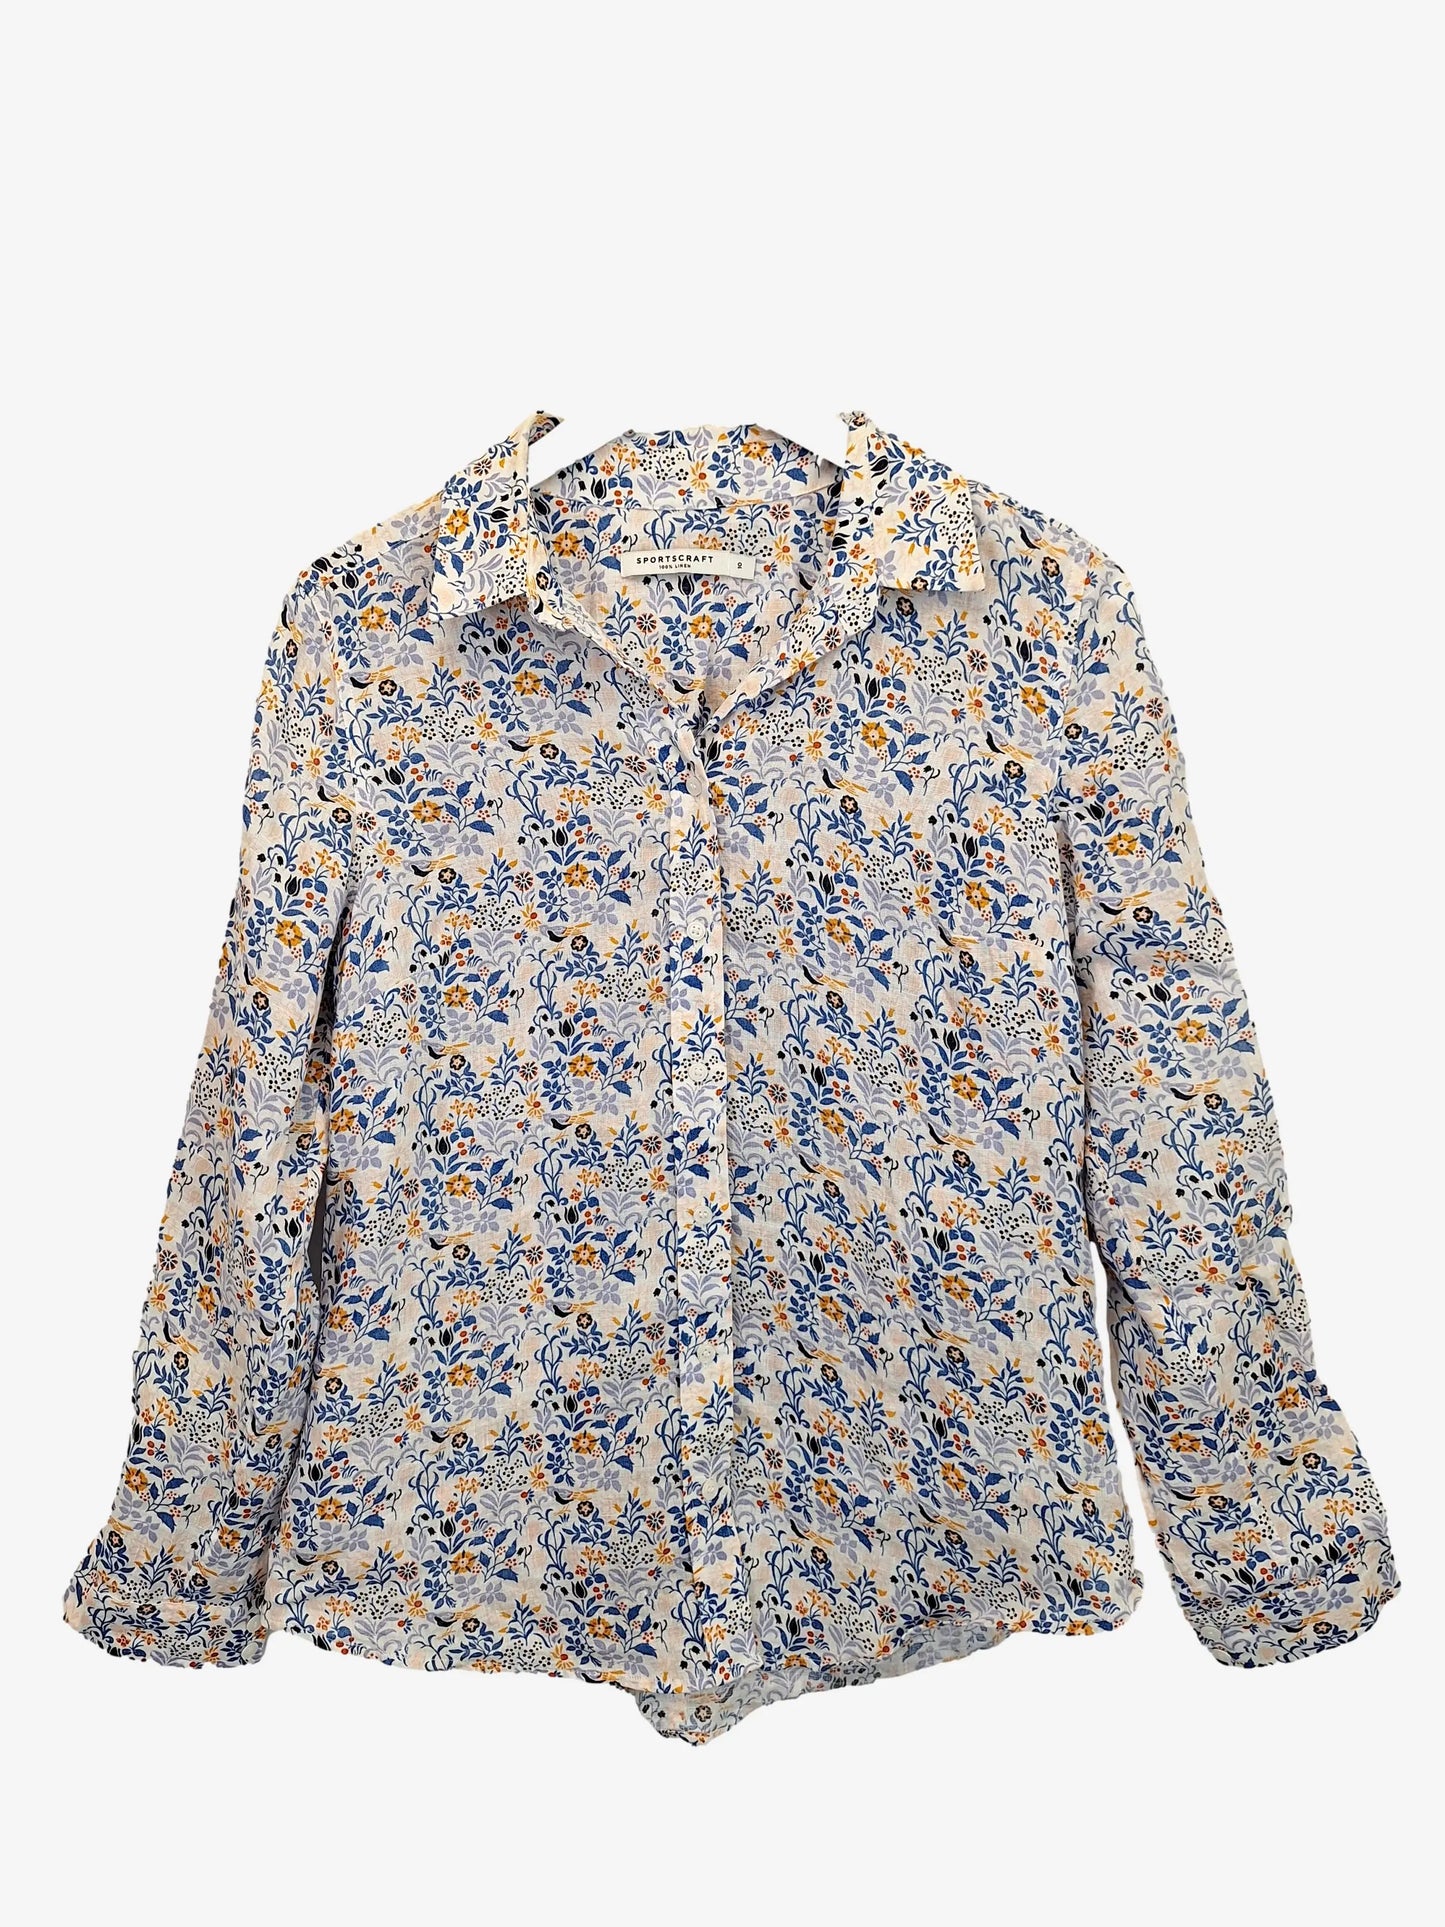 Sportscraft Floral Linen Shirt Size 10 by SwapUp-Online Second Hand Store-Online Thrift Store